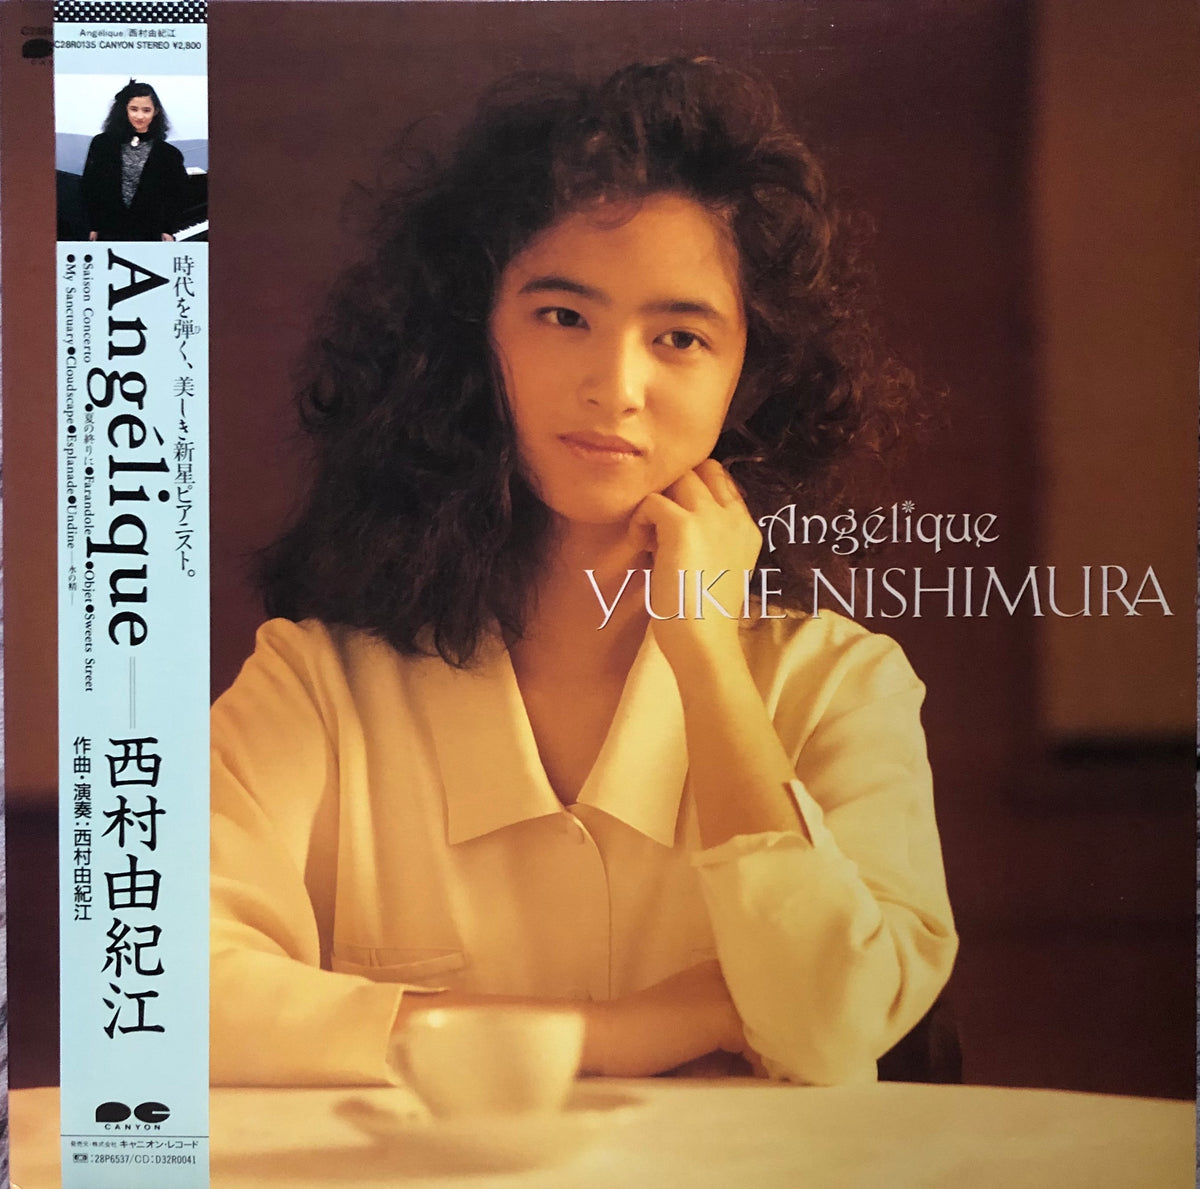 Yukie Nishimura u003d 西村由紀江 u200e– Angelique – Galapagos Records